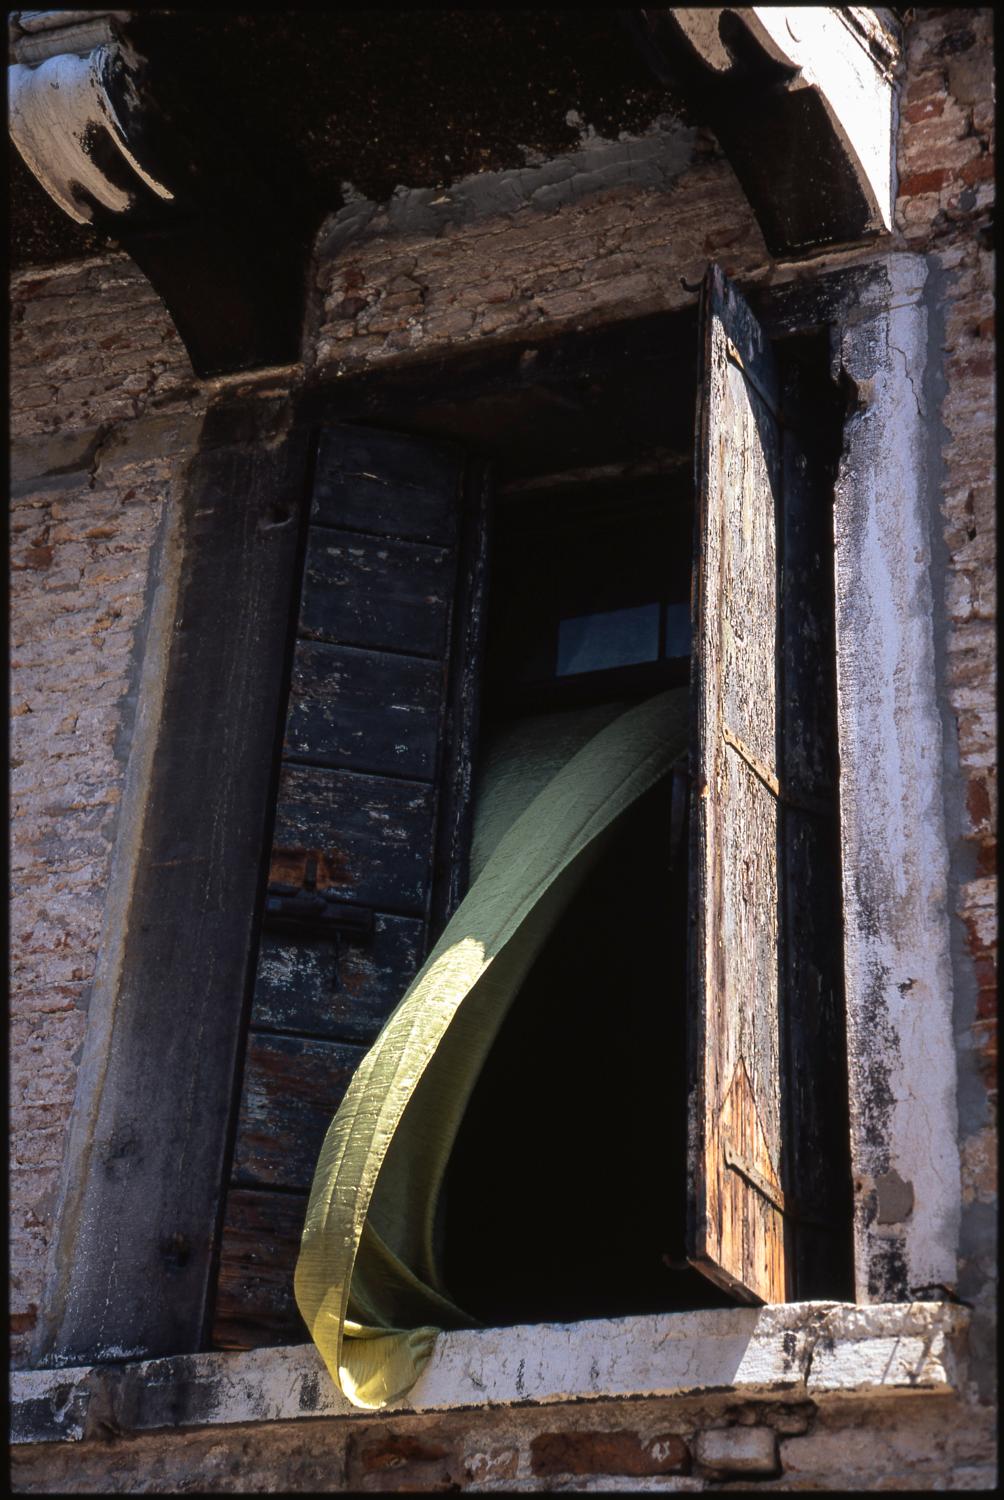 Paul Cooklin Landscape Photograph - Edition 2/10 - Window Shutters, Venice, Italy, C-Type Photograph